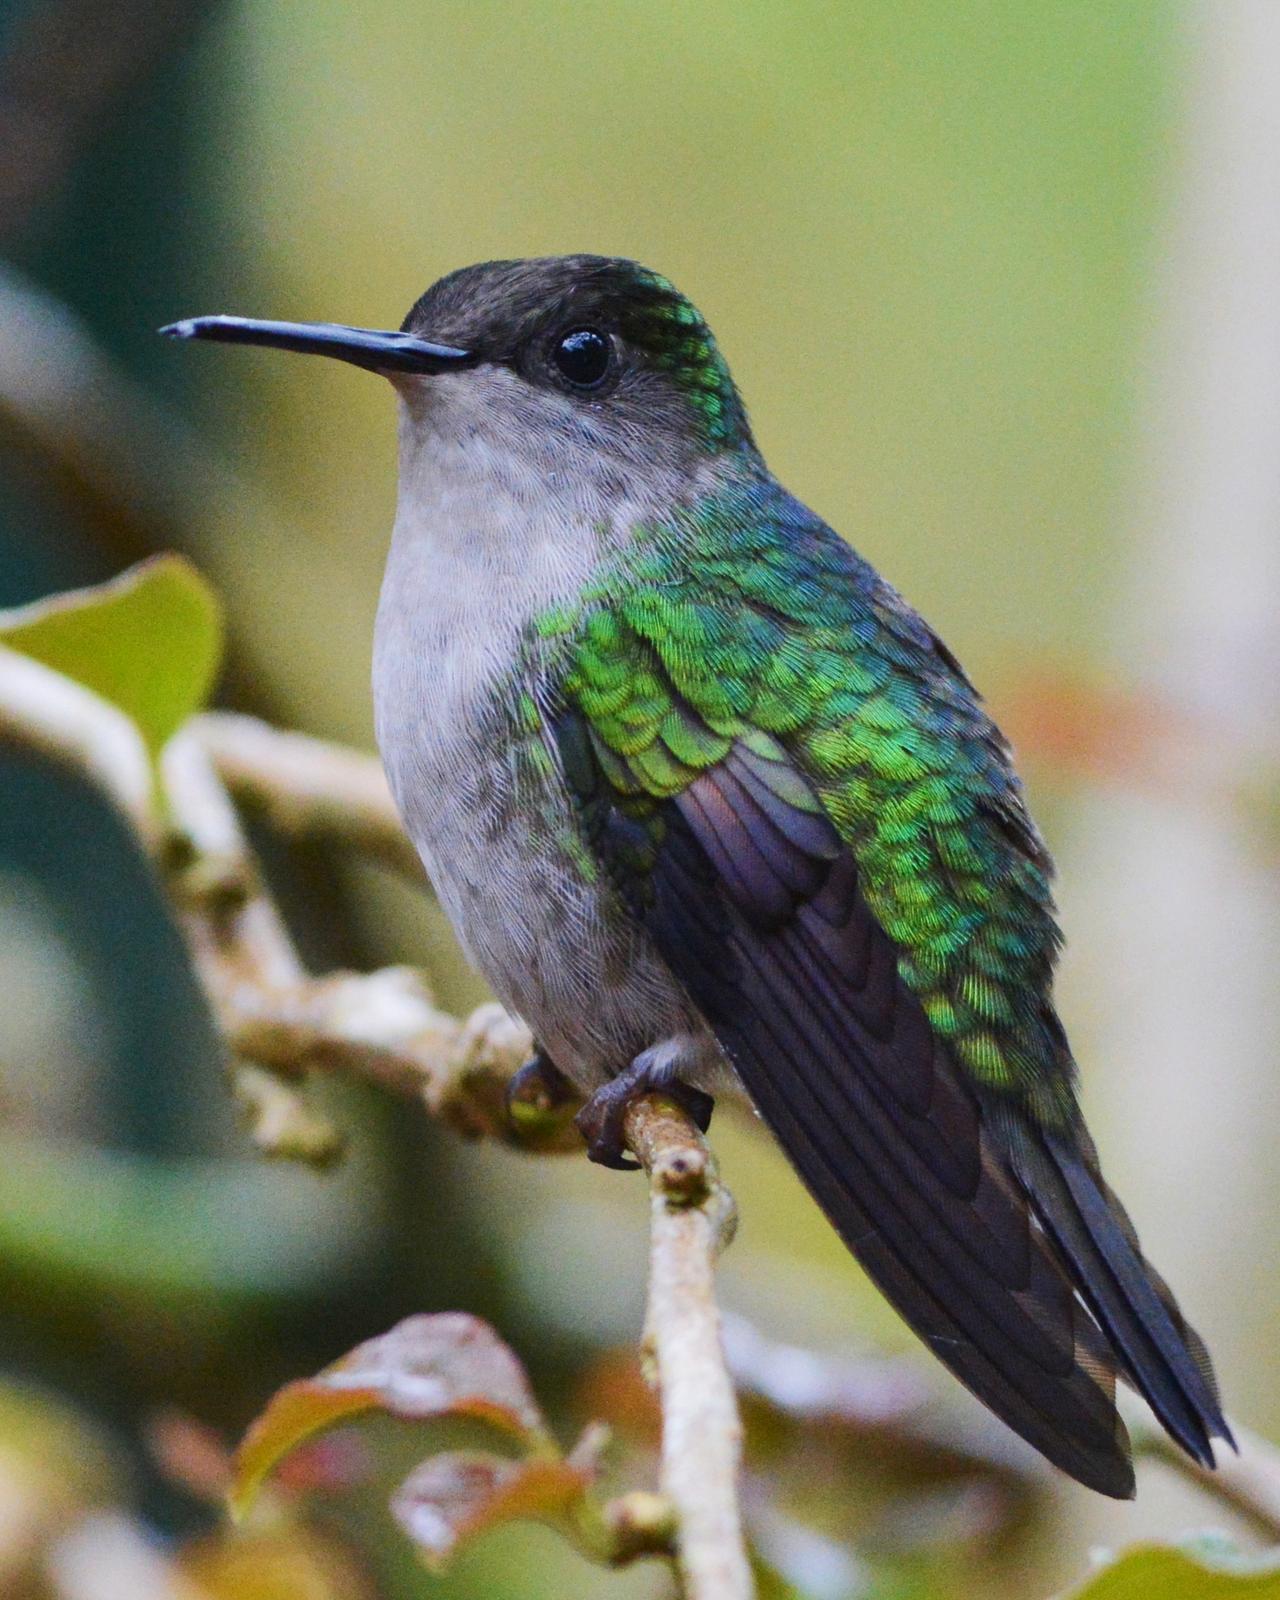 Black-bellied Hummingbird Photo by David Hollie